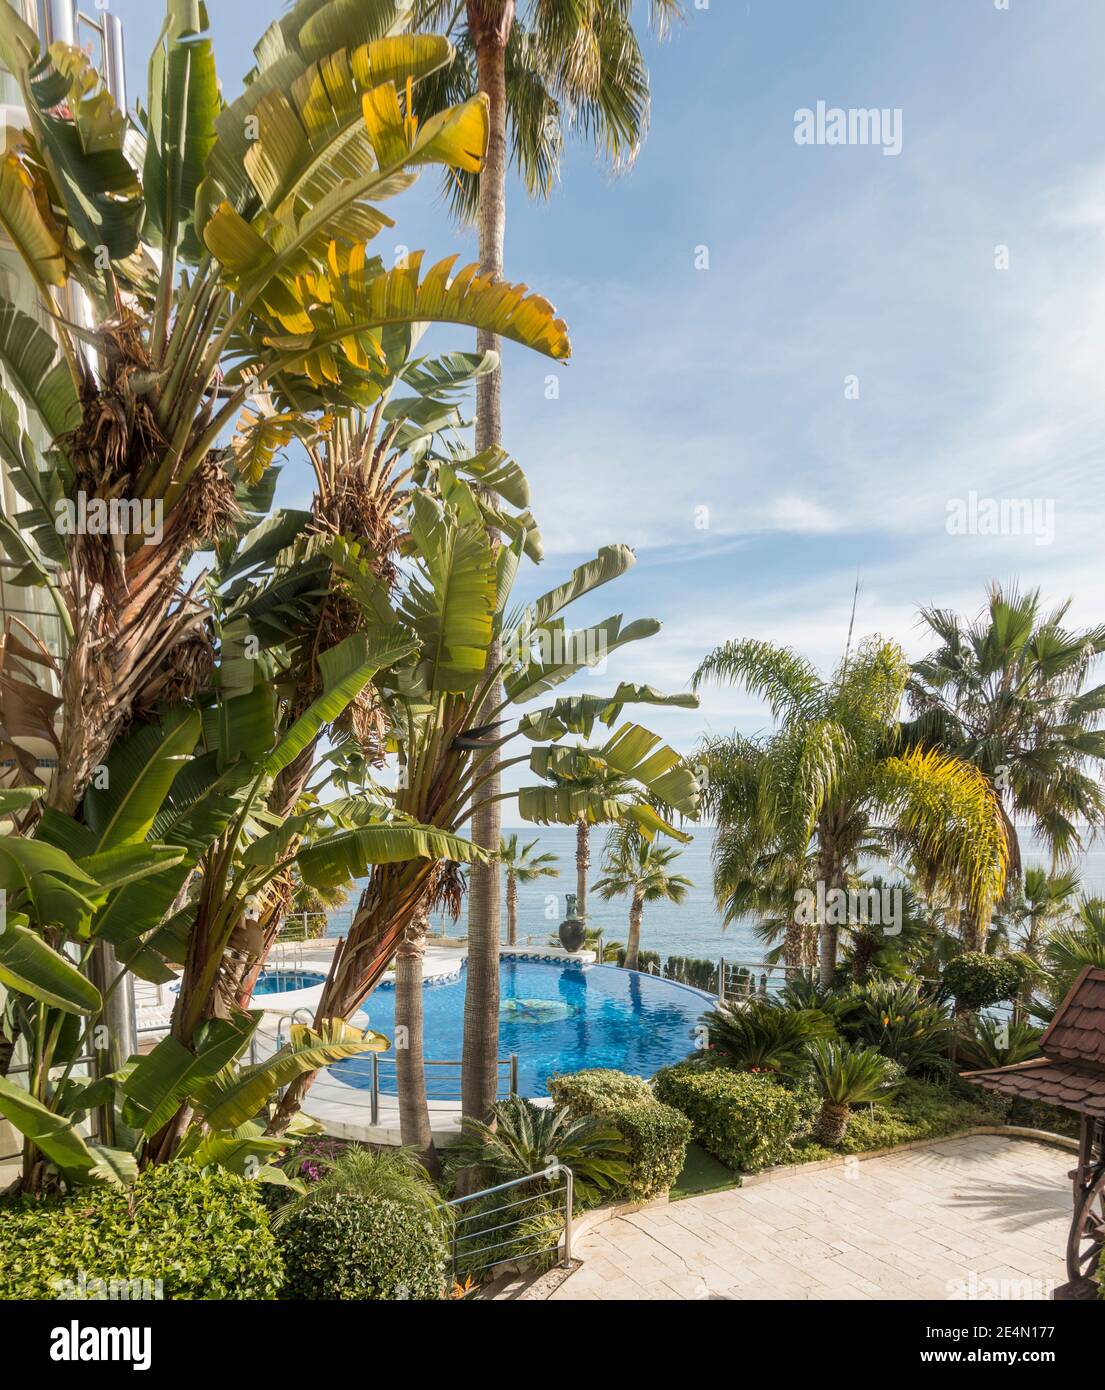 View of swimming pool of apartment block at seaside, Costa del Sol, Malaga, Spain. Stock Photo